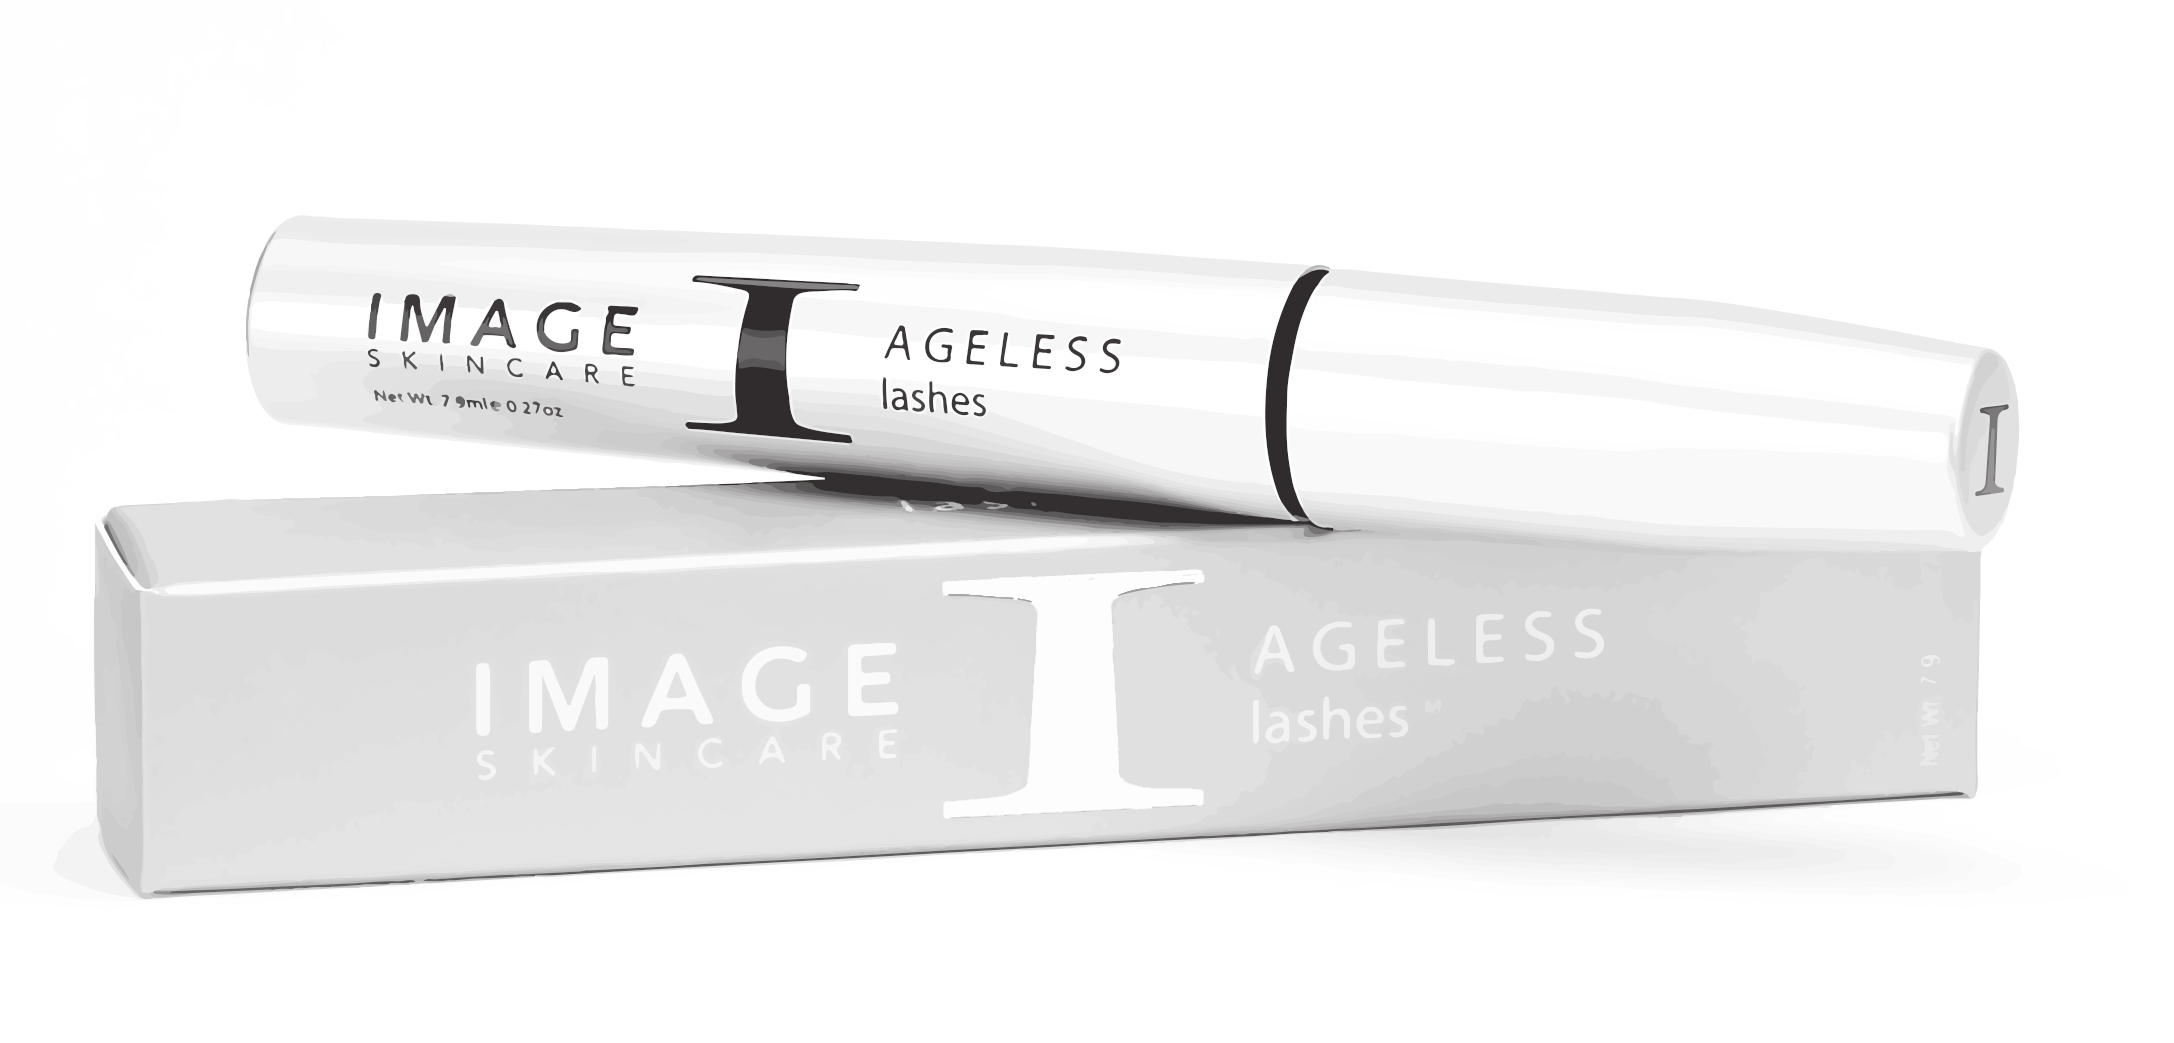 AGELESS Παρουσιάζουμε το AGELESS LASHES TM από την IMAGE Skincare.